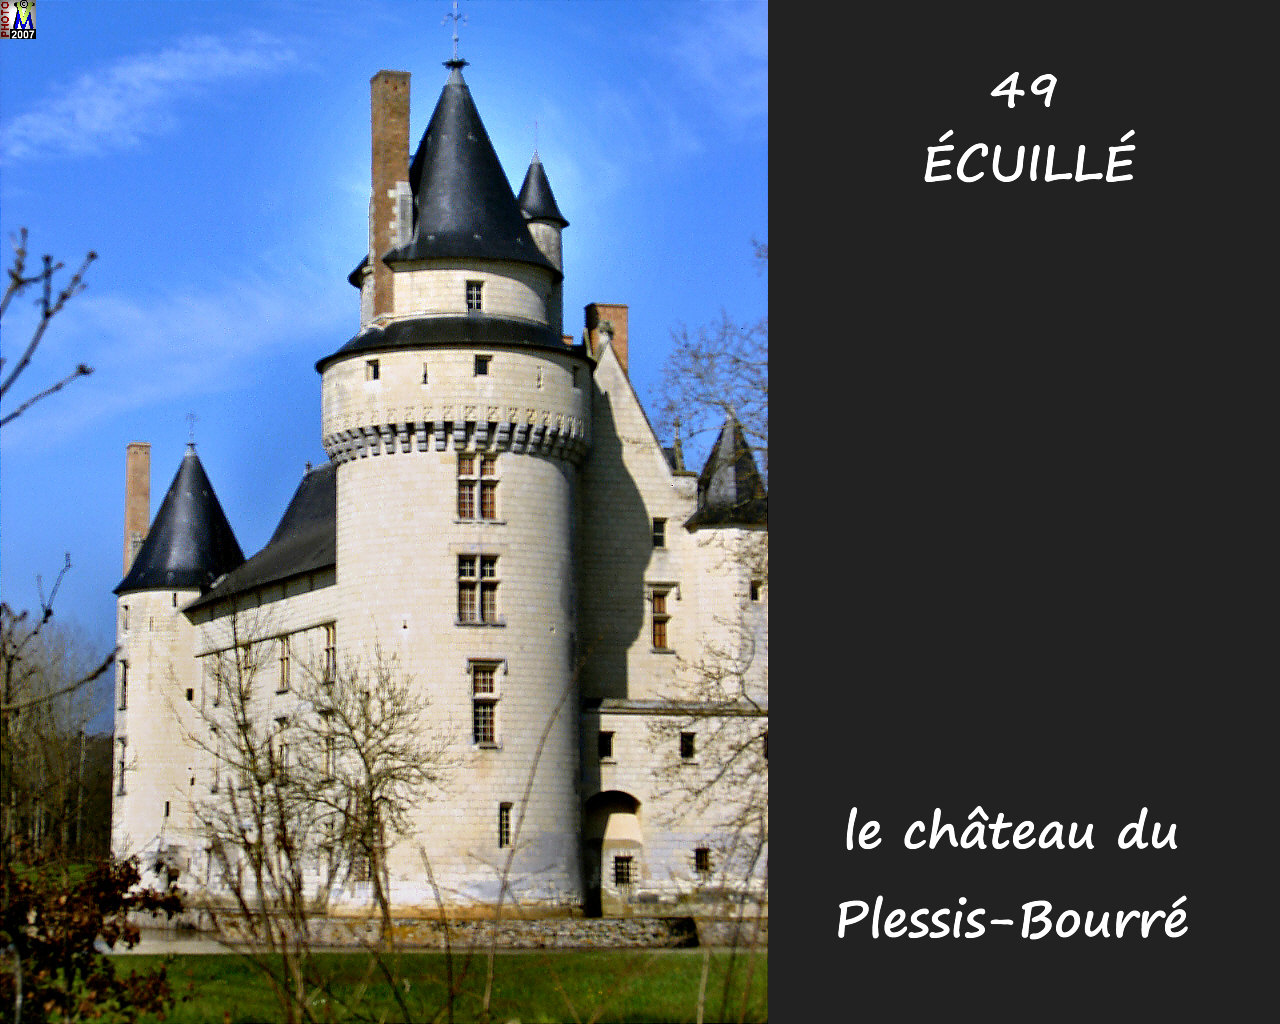 49ECUILLE_chateau_104.jpg